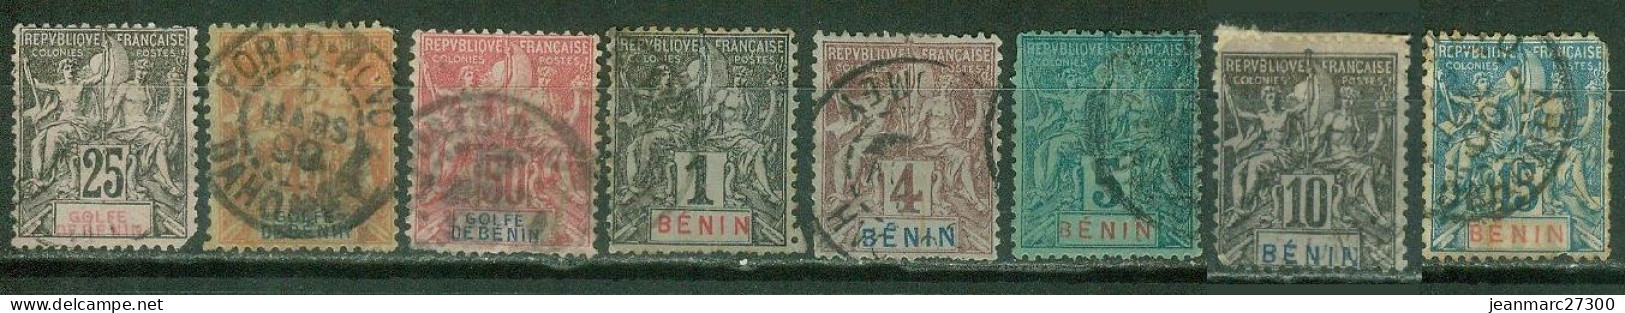 FRANCE COLONIES - BENIN - YT N° 27 29 30 33 35 36 38 Oblitérés - Used Stamps